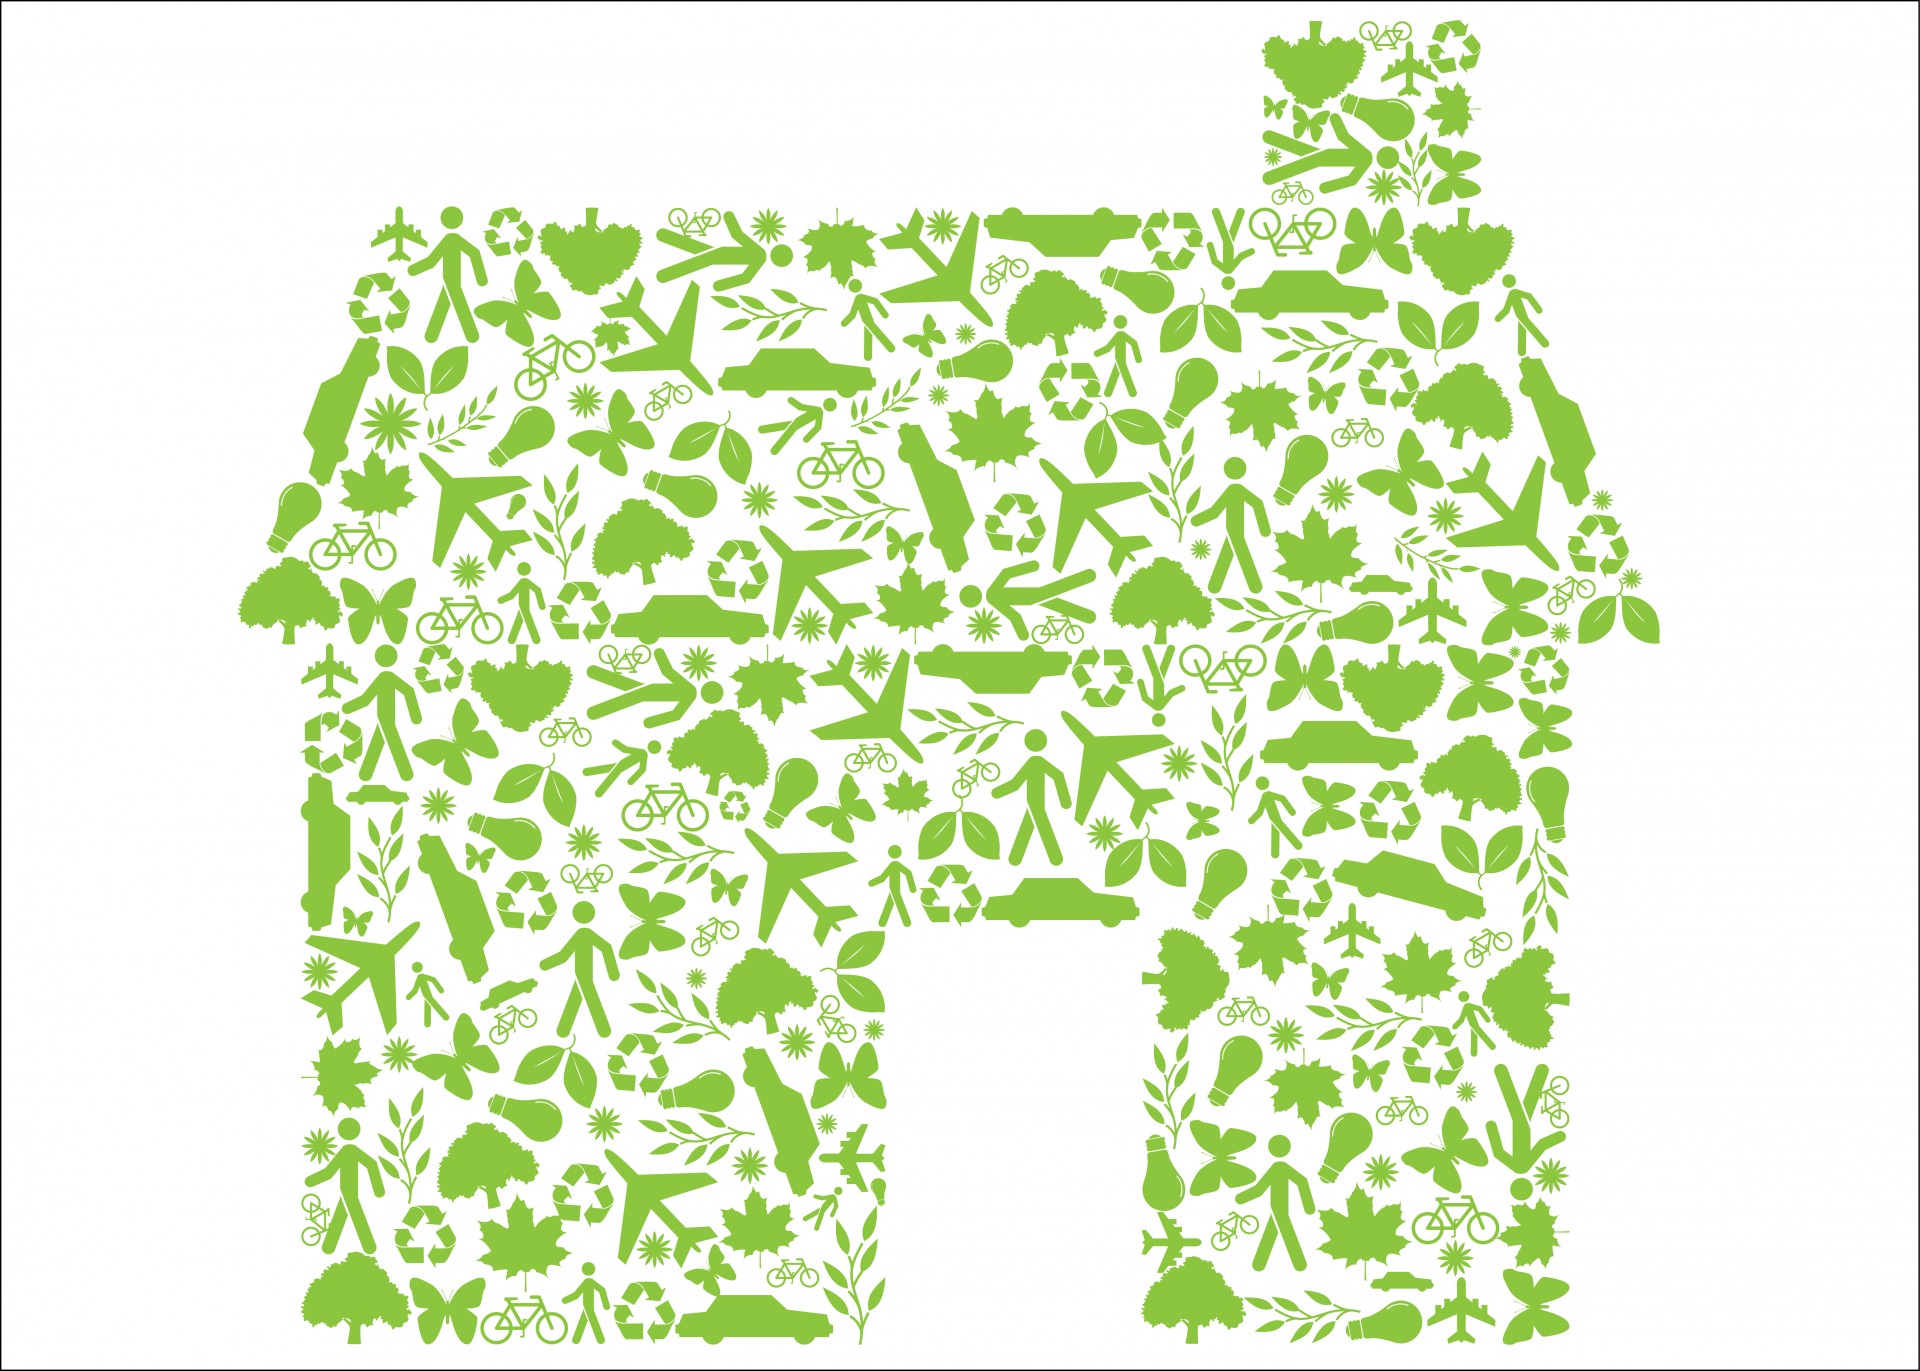 green-energy-eco-home